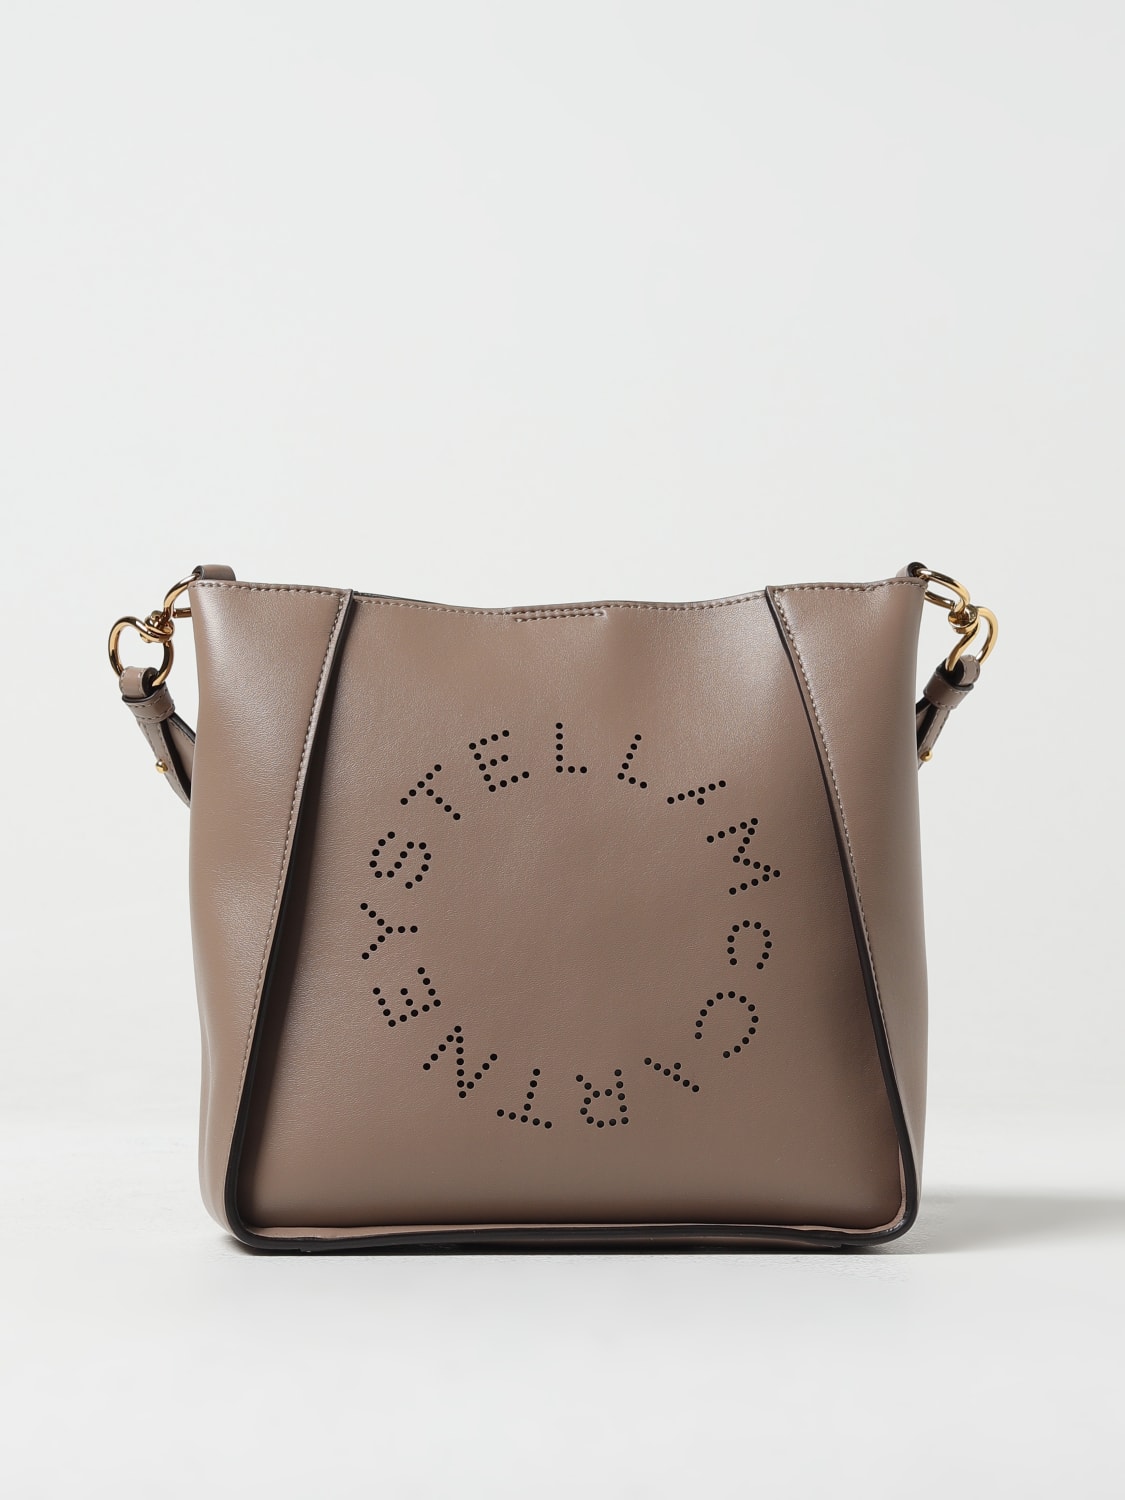 STELLA MCCARTNEY: Shoulder bag woman - Beige | Stella McCartney shoulder bag  700073W8542 online at GIGLIO.COM